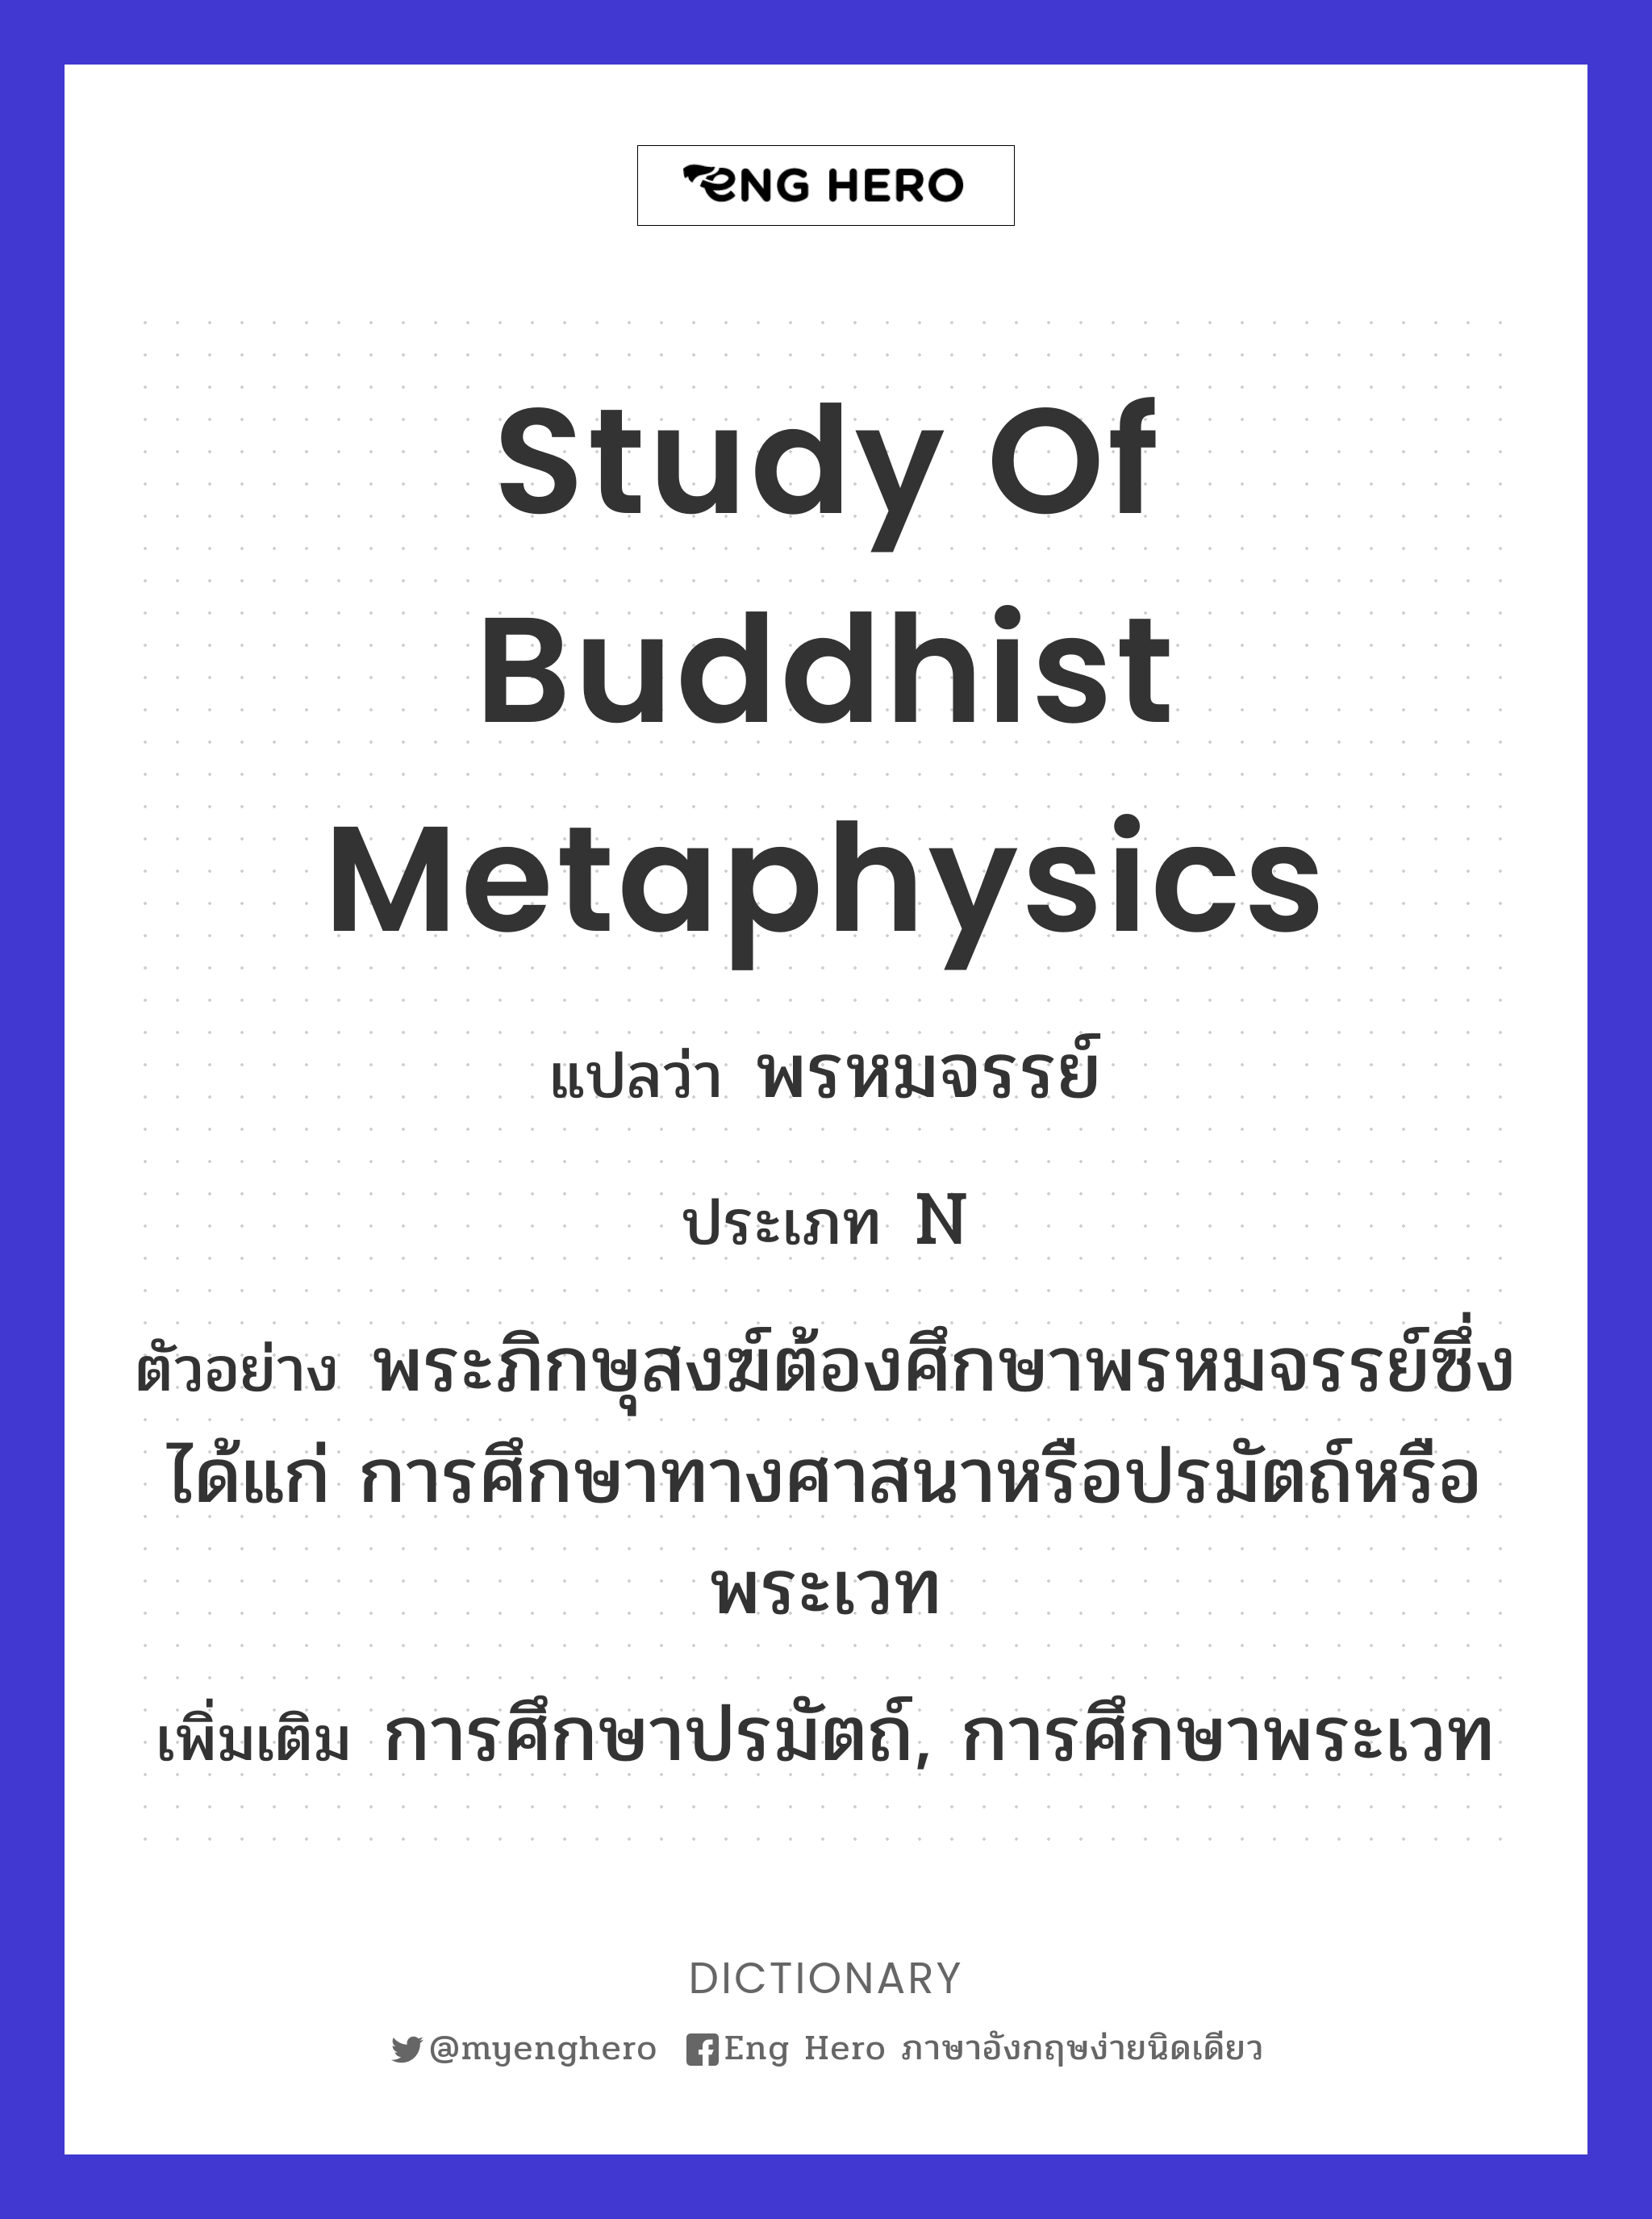 study of Buddhist metaphysics